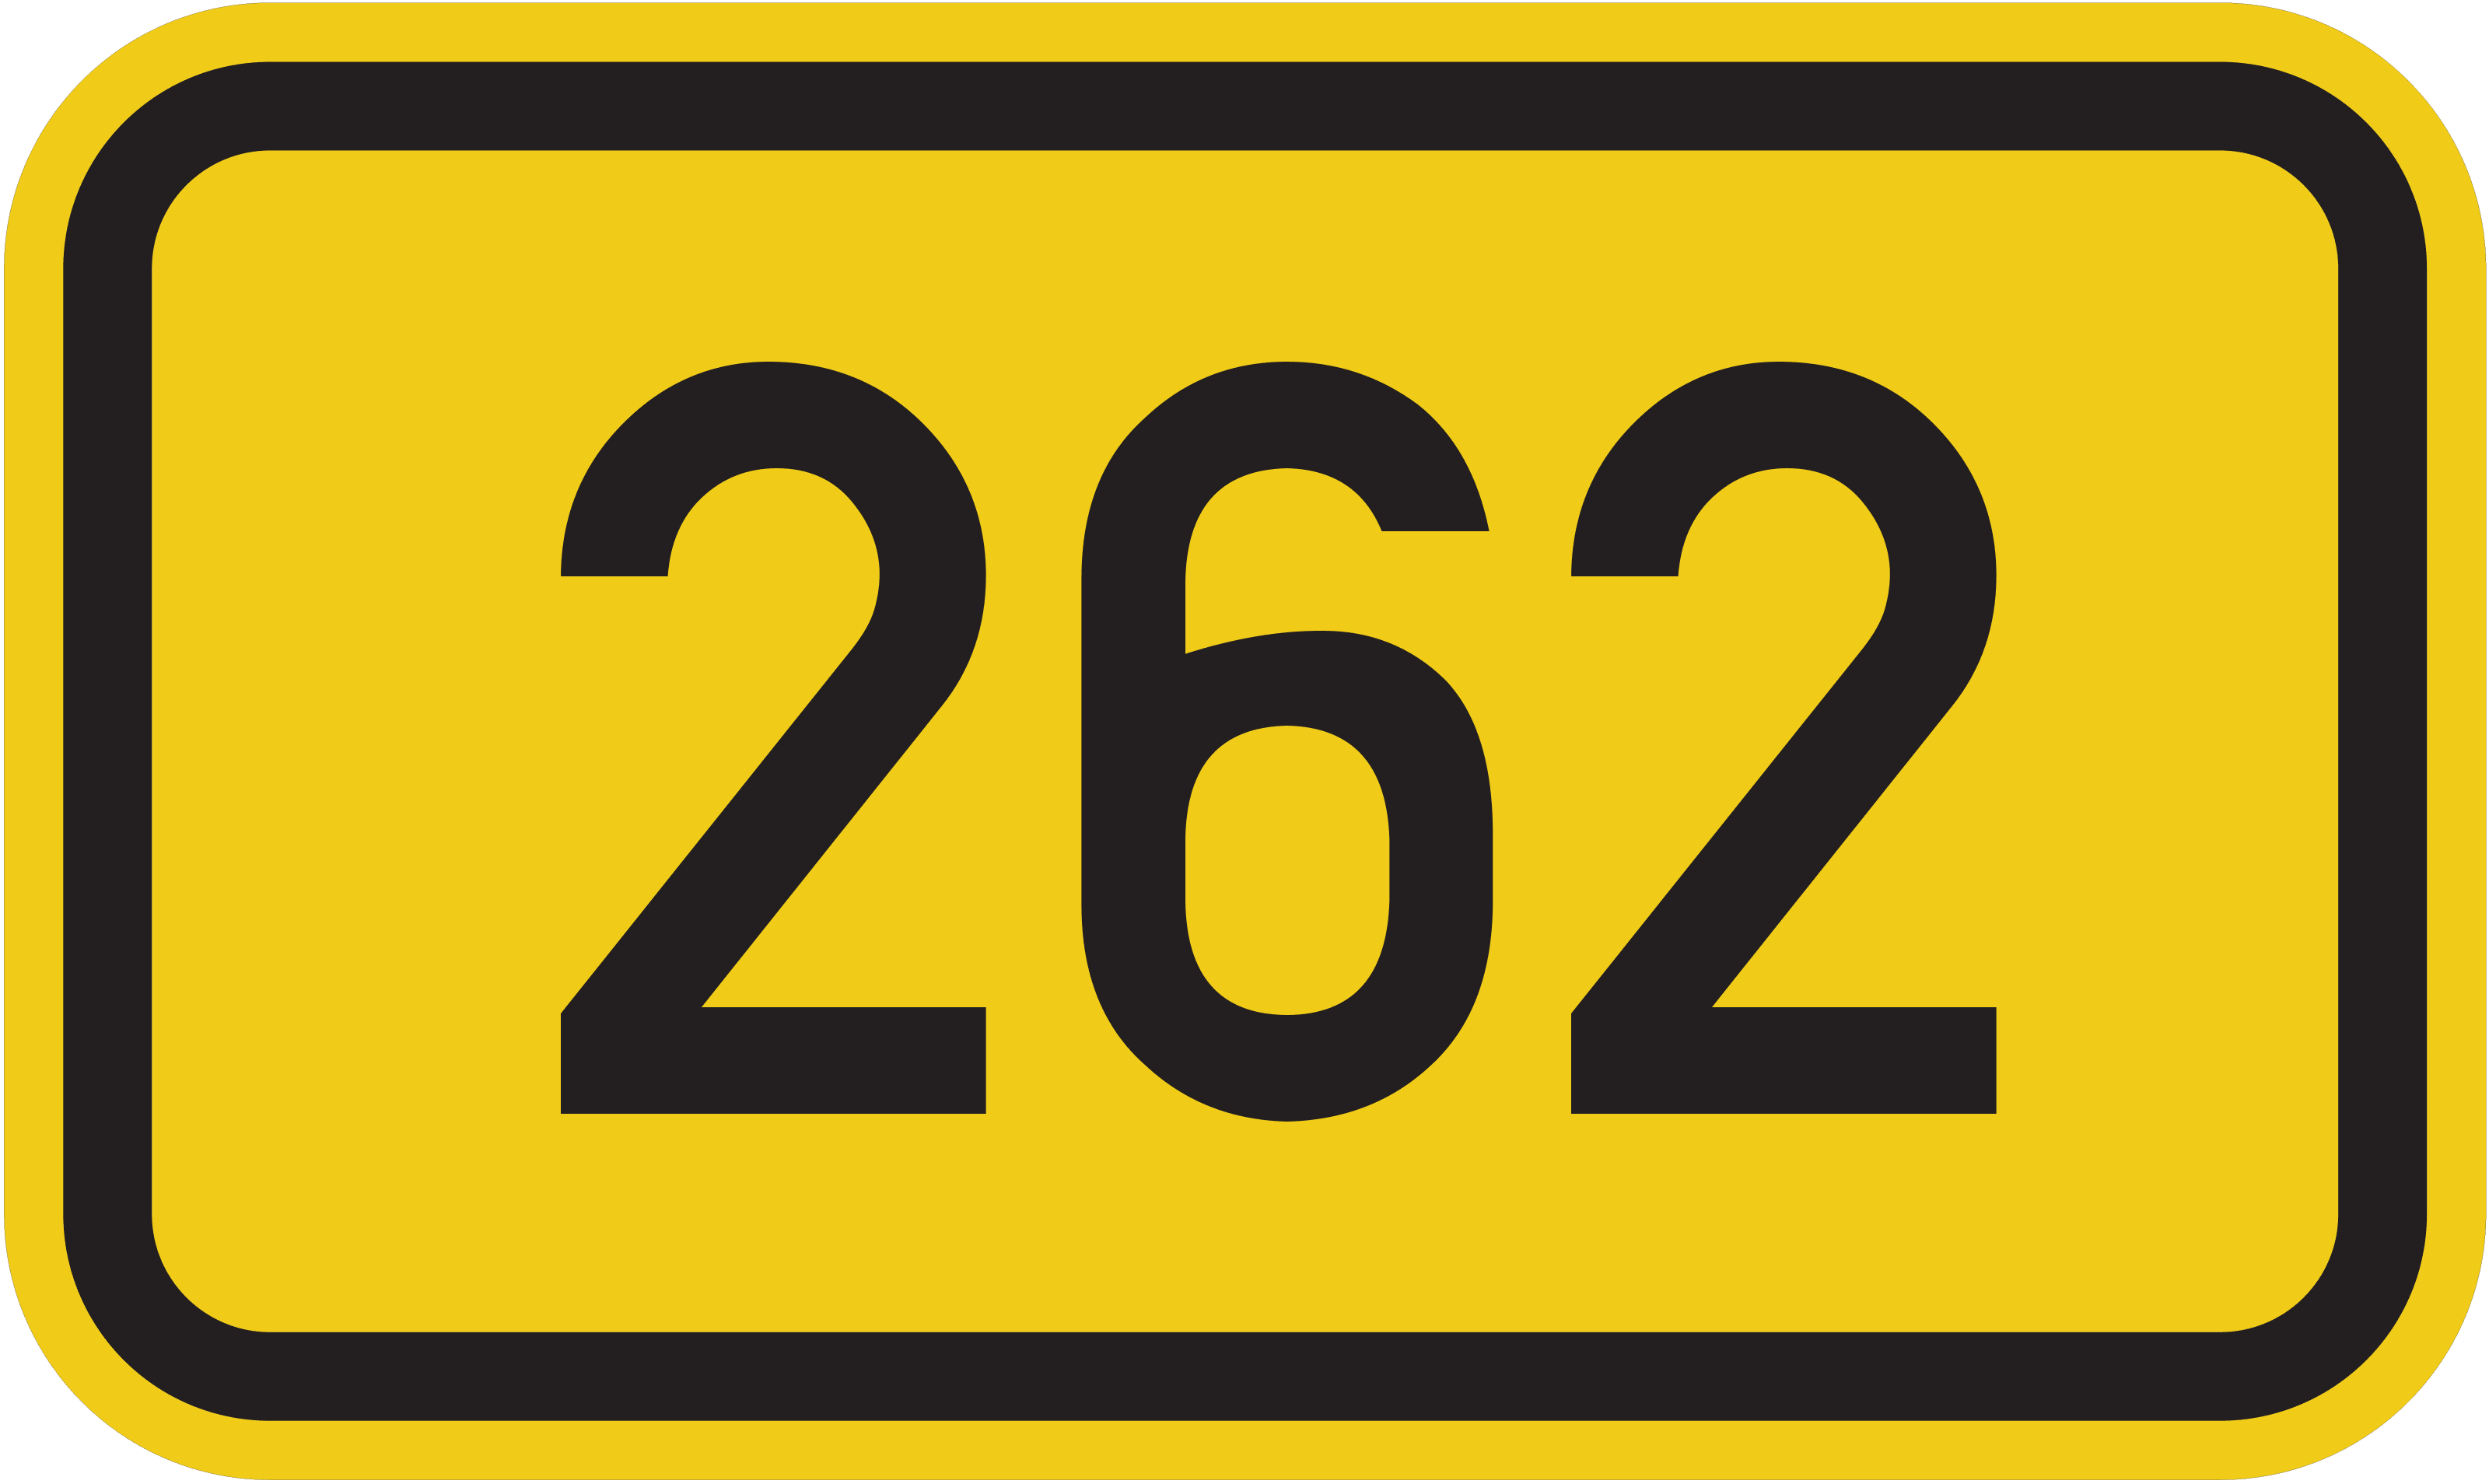 Straßenschild Bundesstraße 262